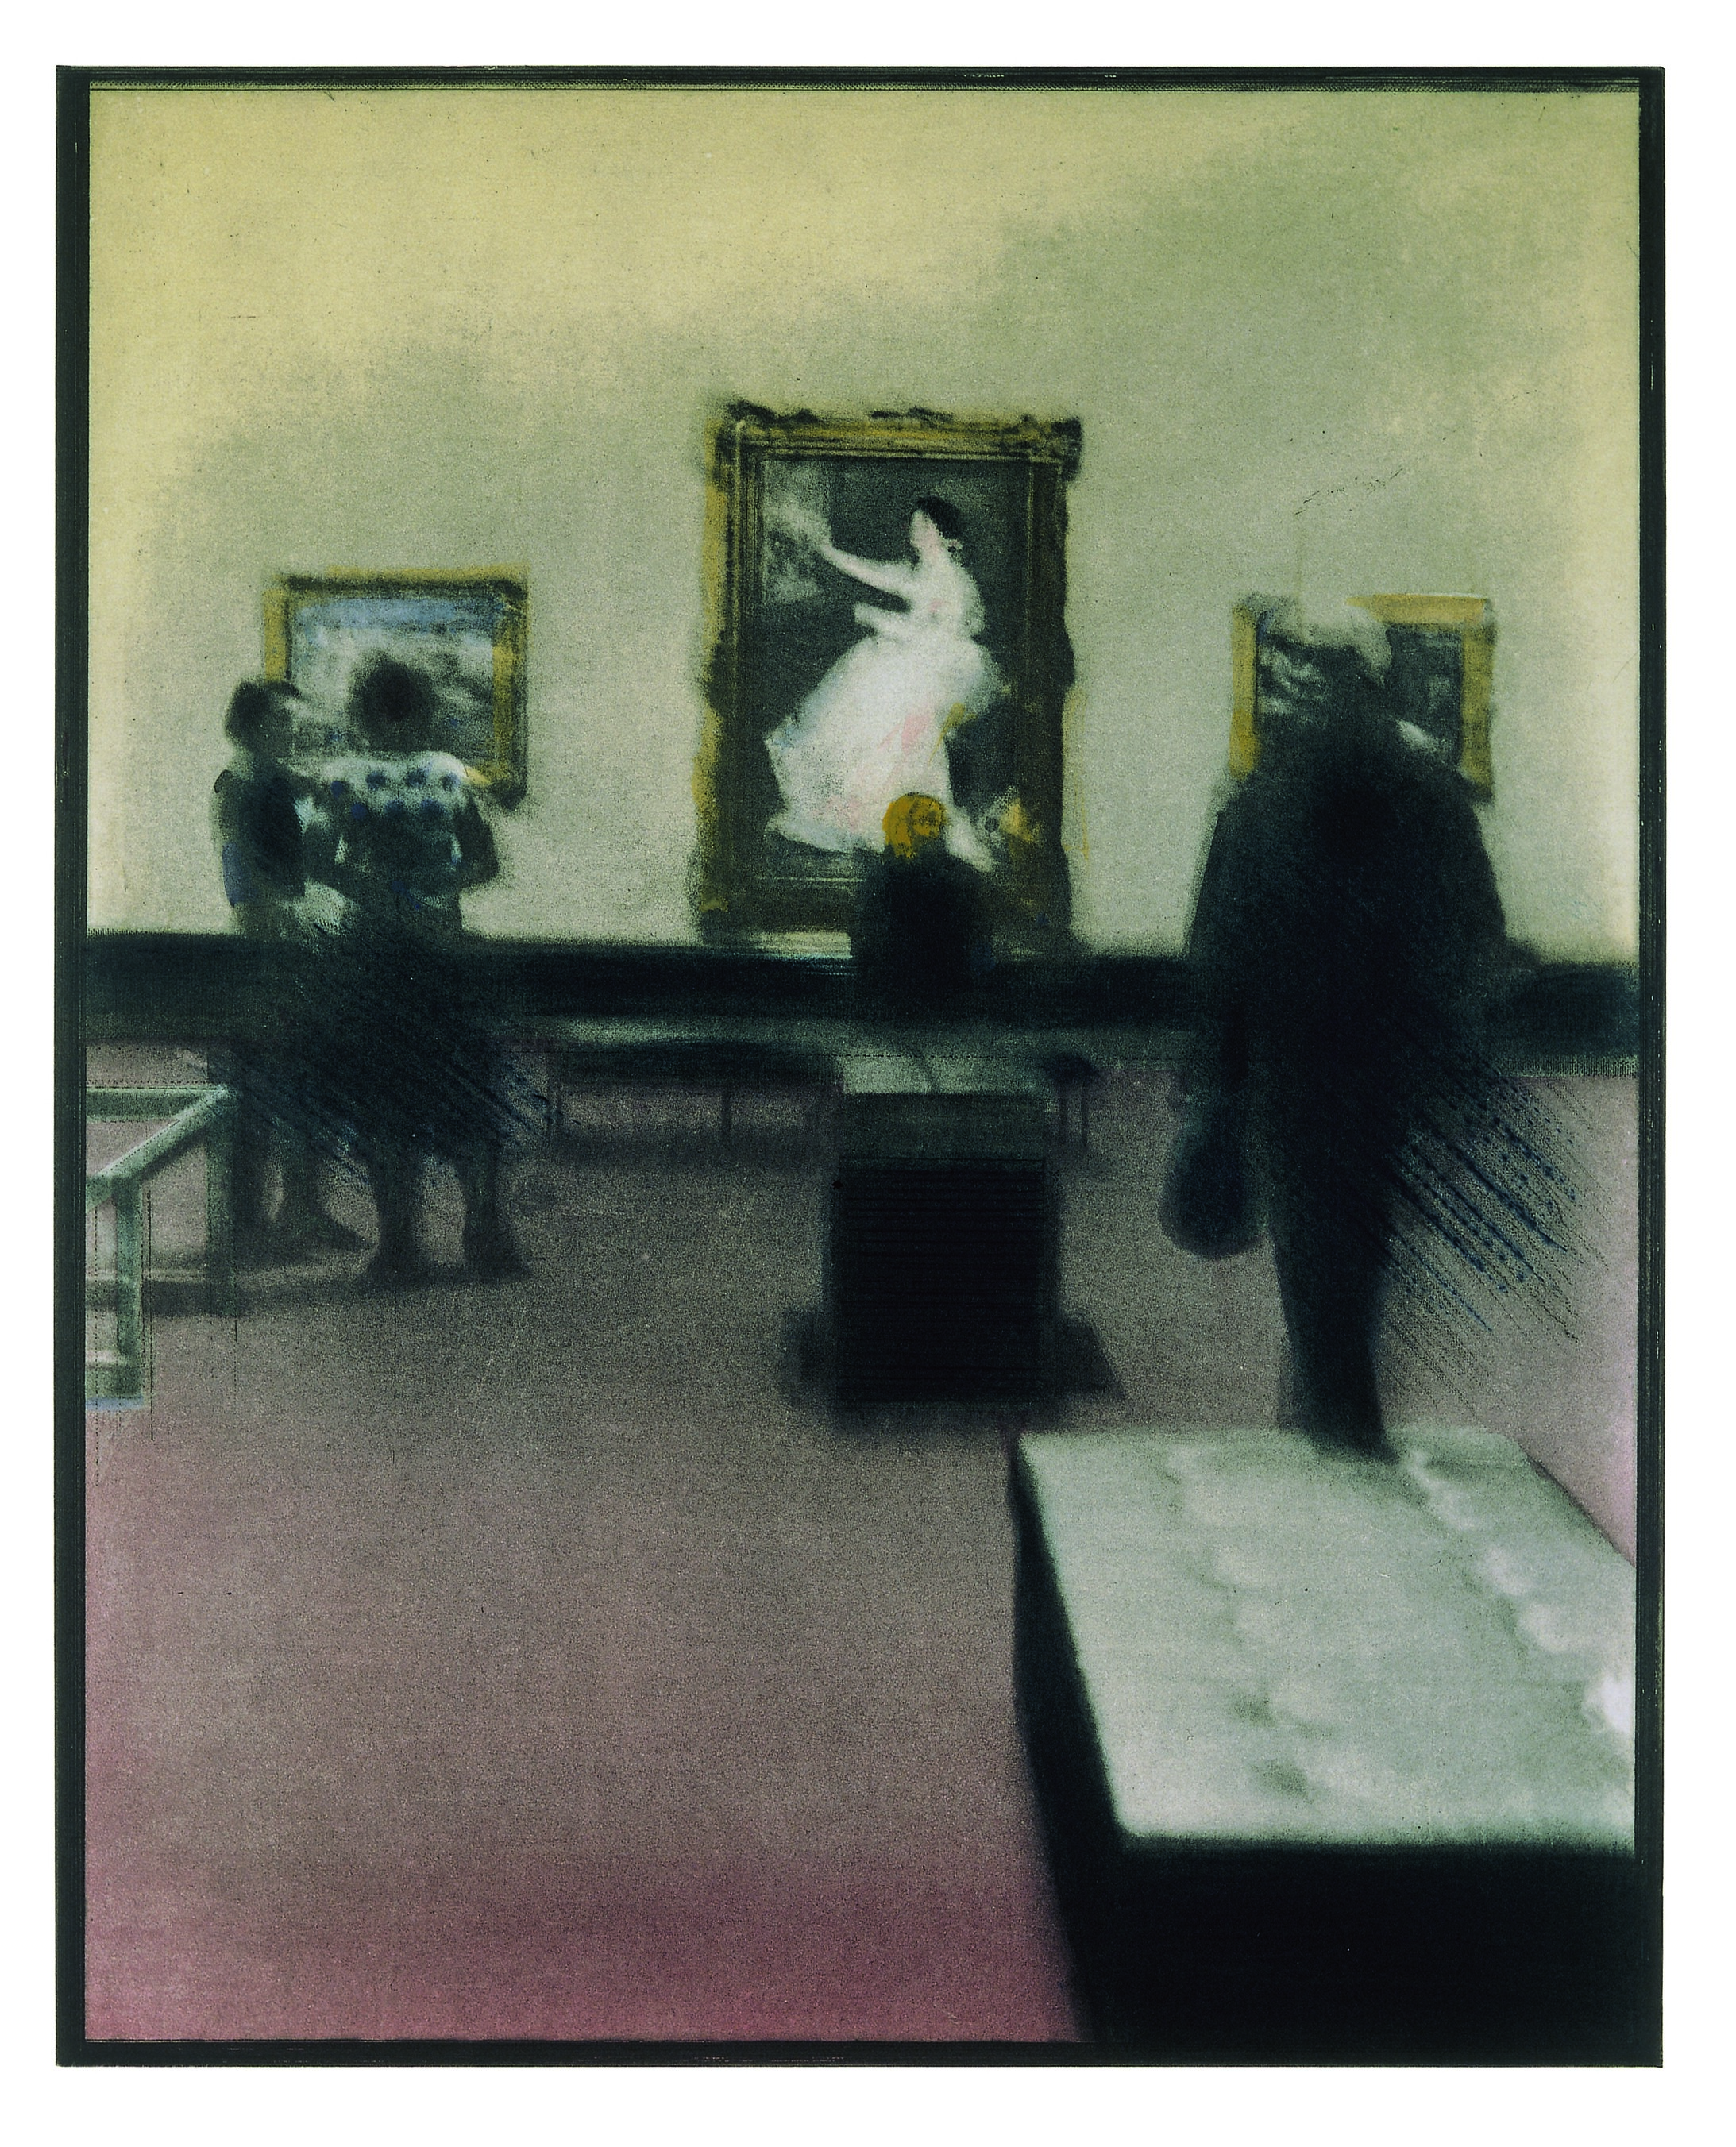 Manet, 1977, Farbradierung, Aquatinta, Fotogravure, Kaltnadel, Aquarell und Gouache
387x318 mm© Pravoslav Sovak